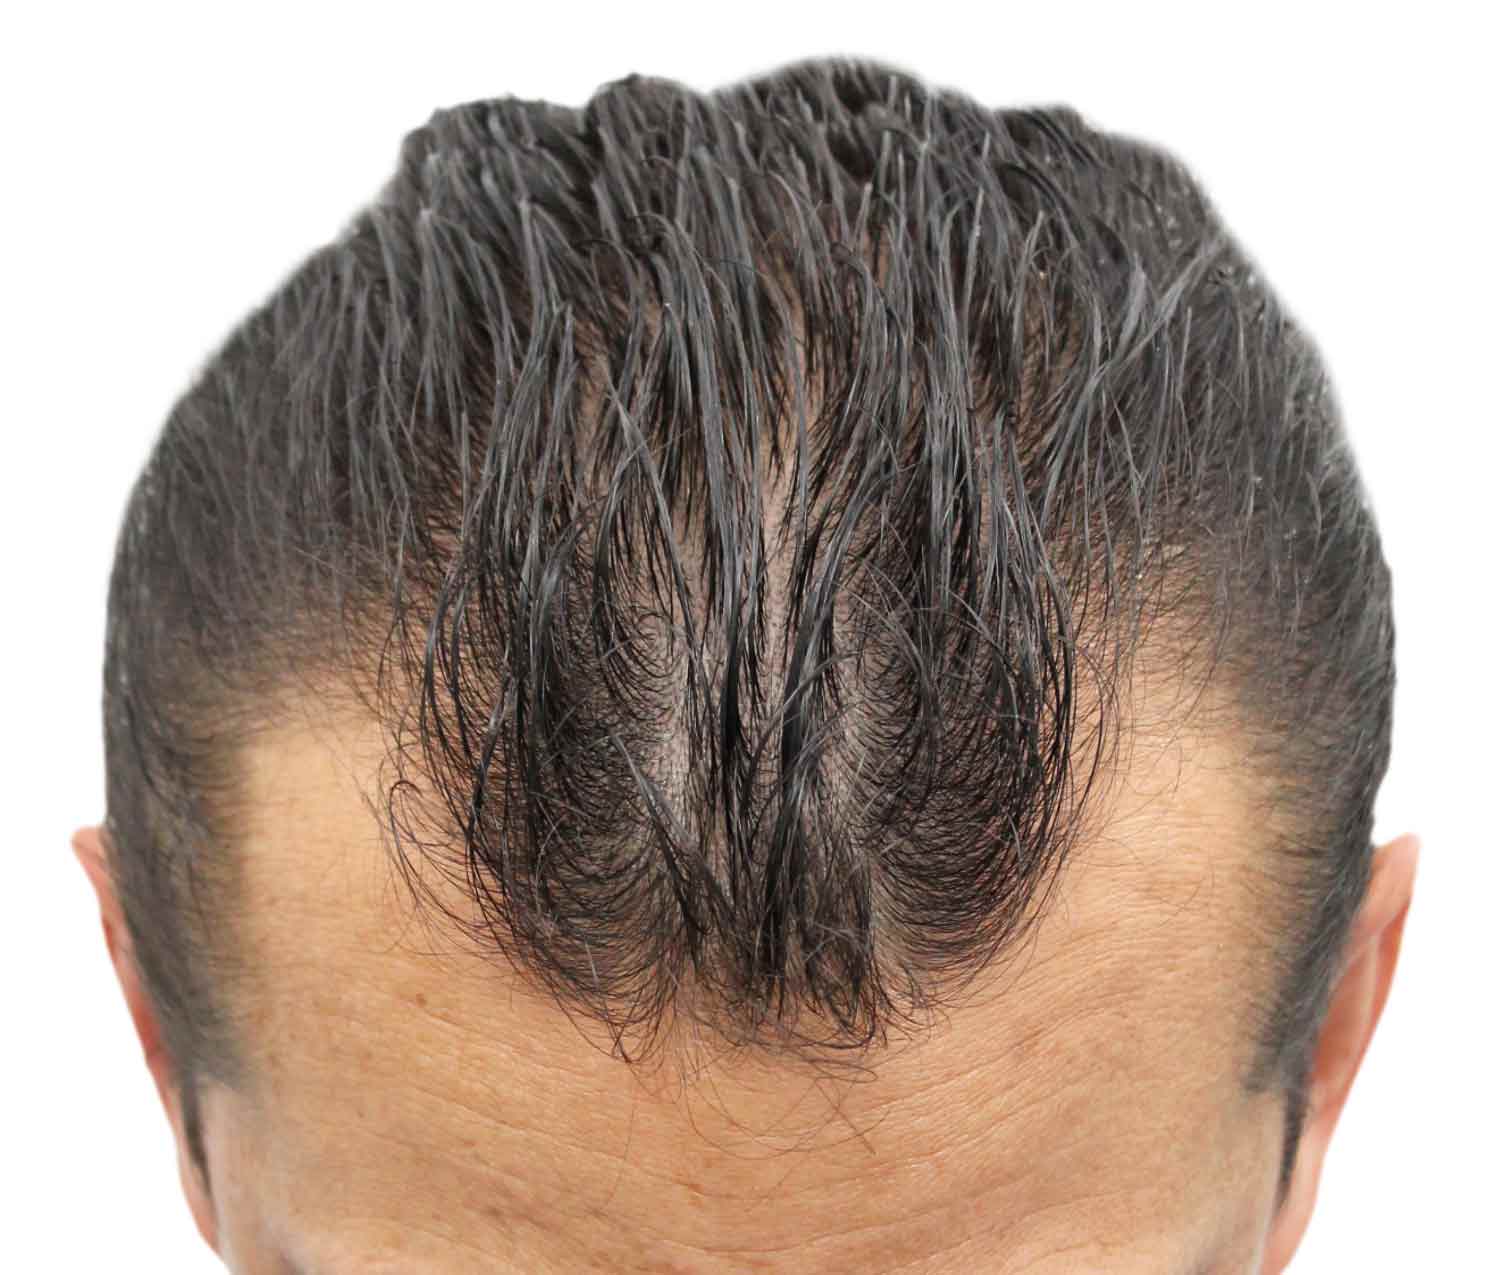 Before hair restoration | Real patient, results may vary per individual